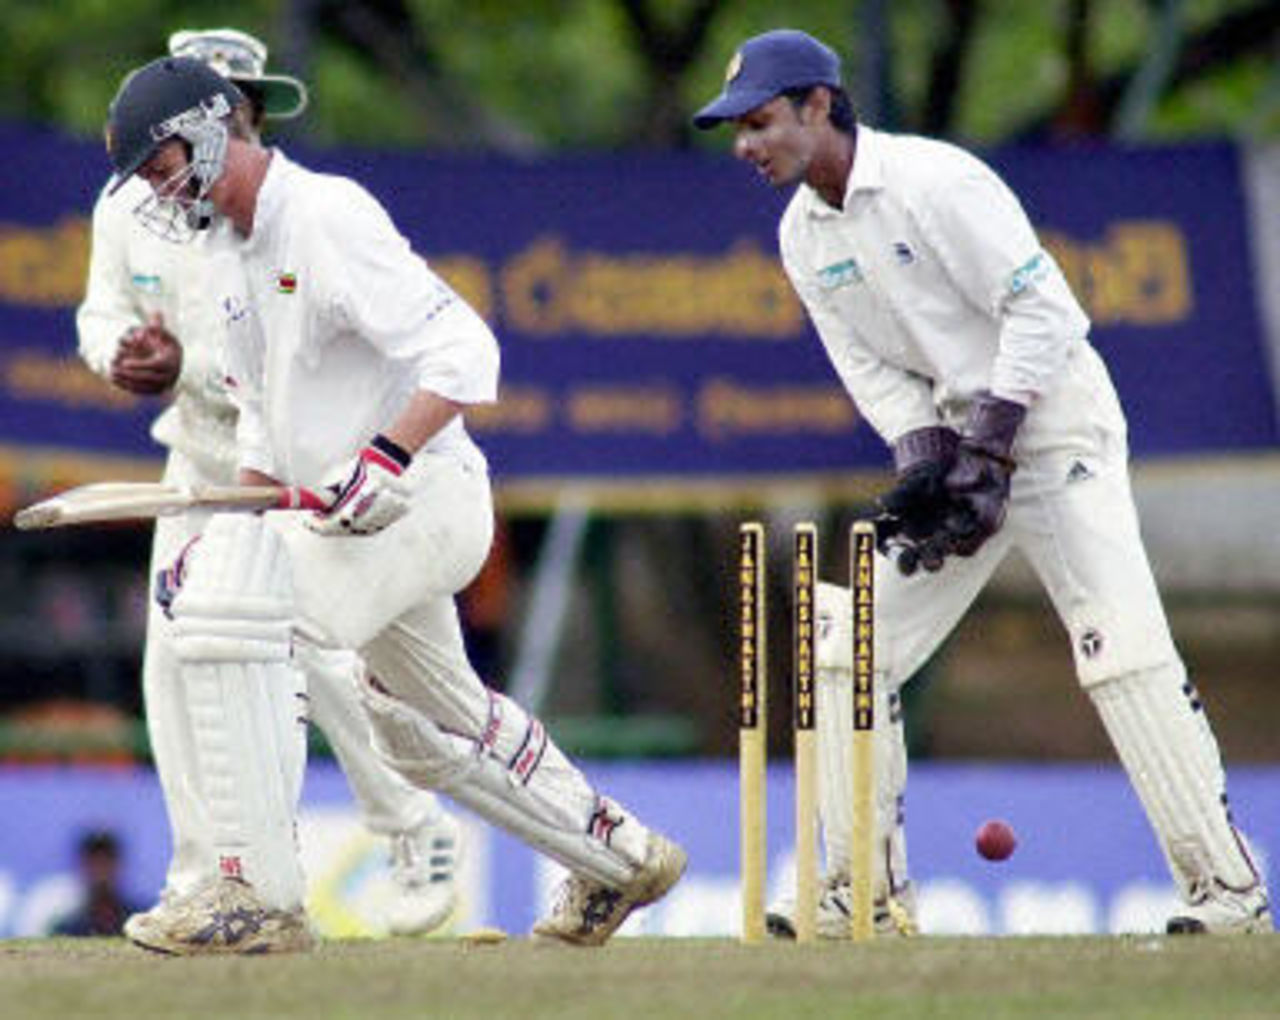 2nd Test: Sri Lanka v Zimbabwe at Asgiriya International Stadium in Kandy, Janashakthi National Test Series Dec 2001-Jan 2002.